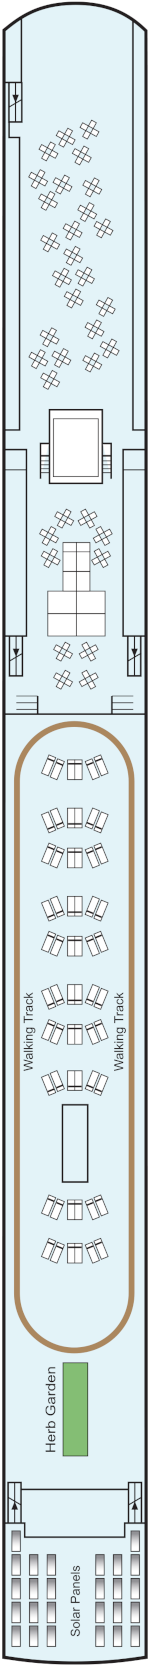 Viking Egdir Sun Deck Deck Plan